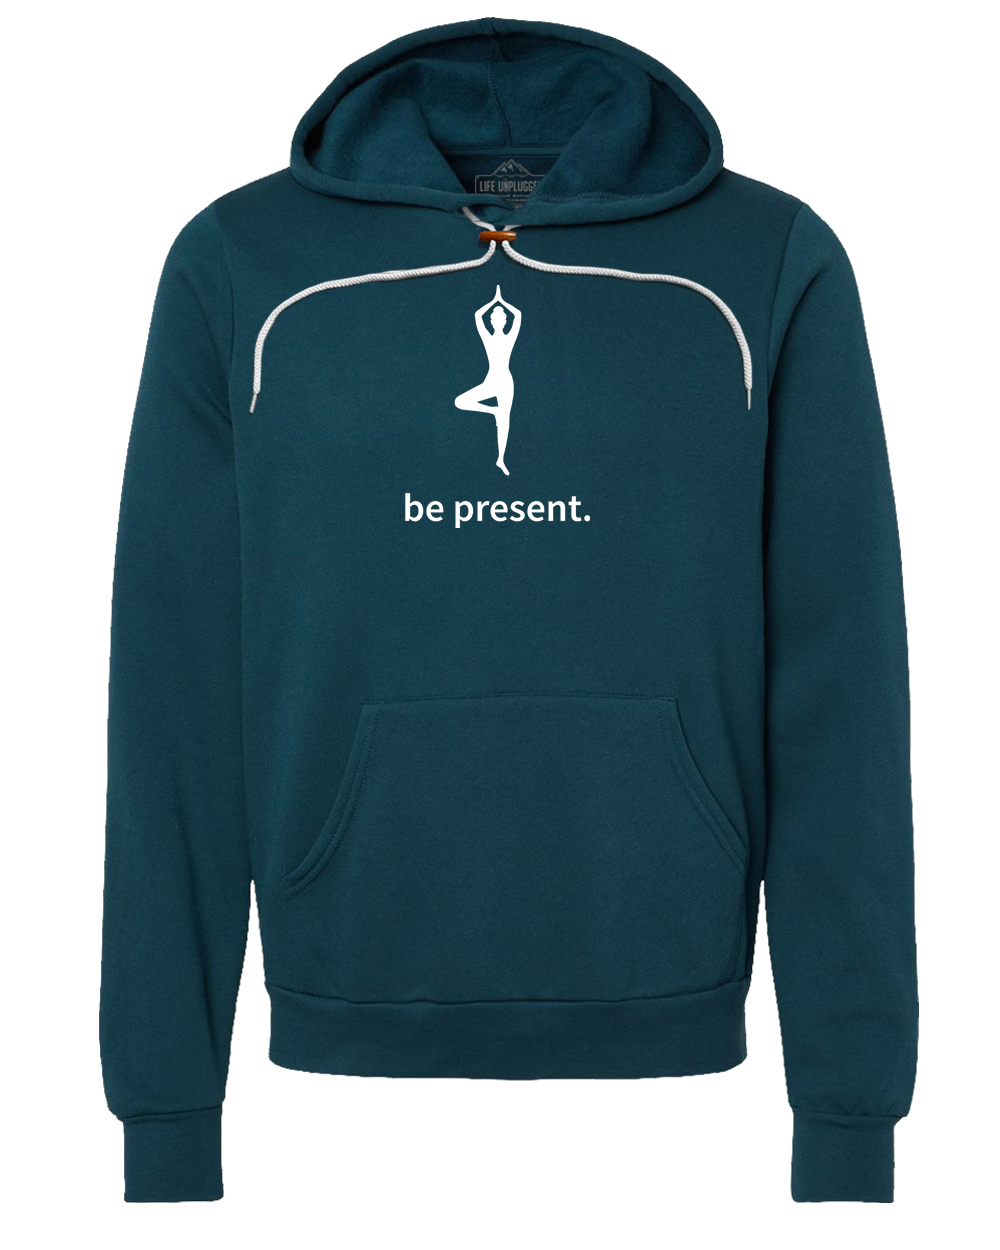 Yoga Premium Super Soft Hooded Sweatshirt - Life Unplugged